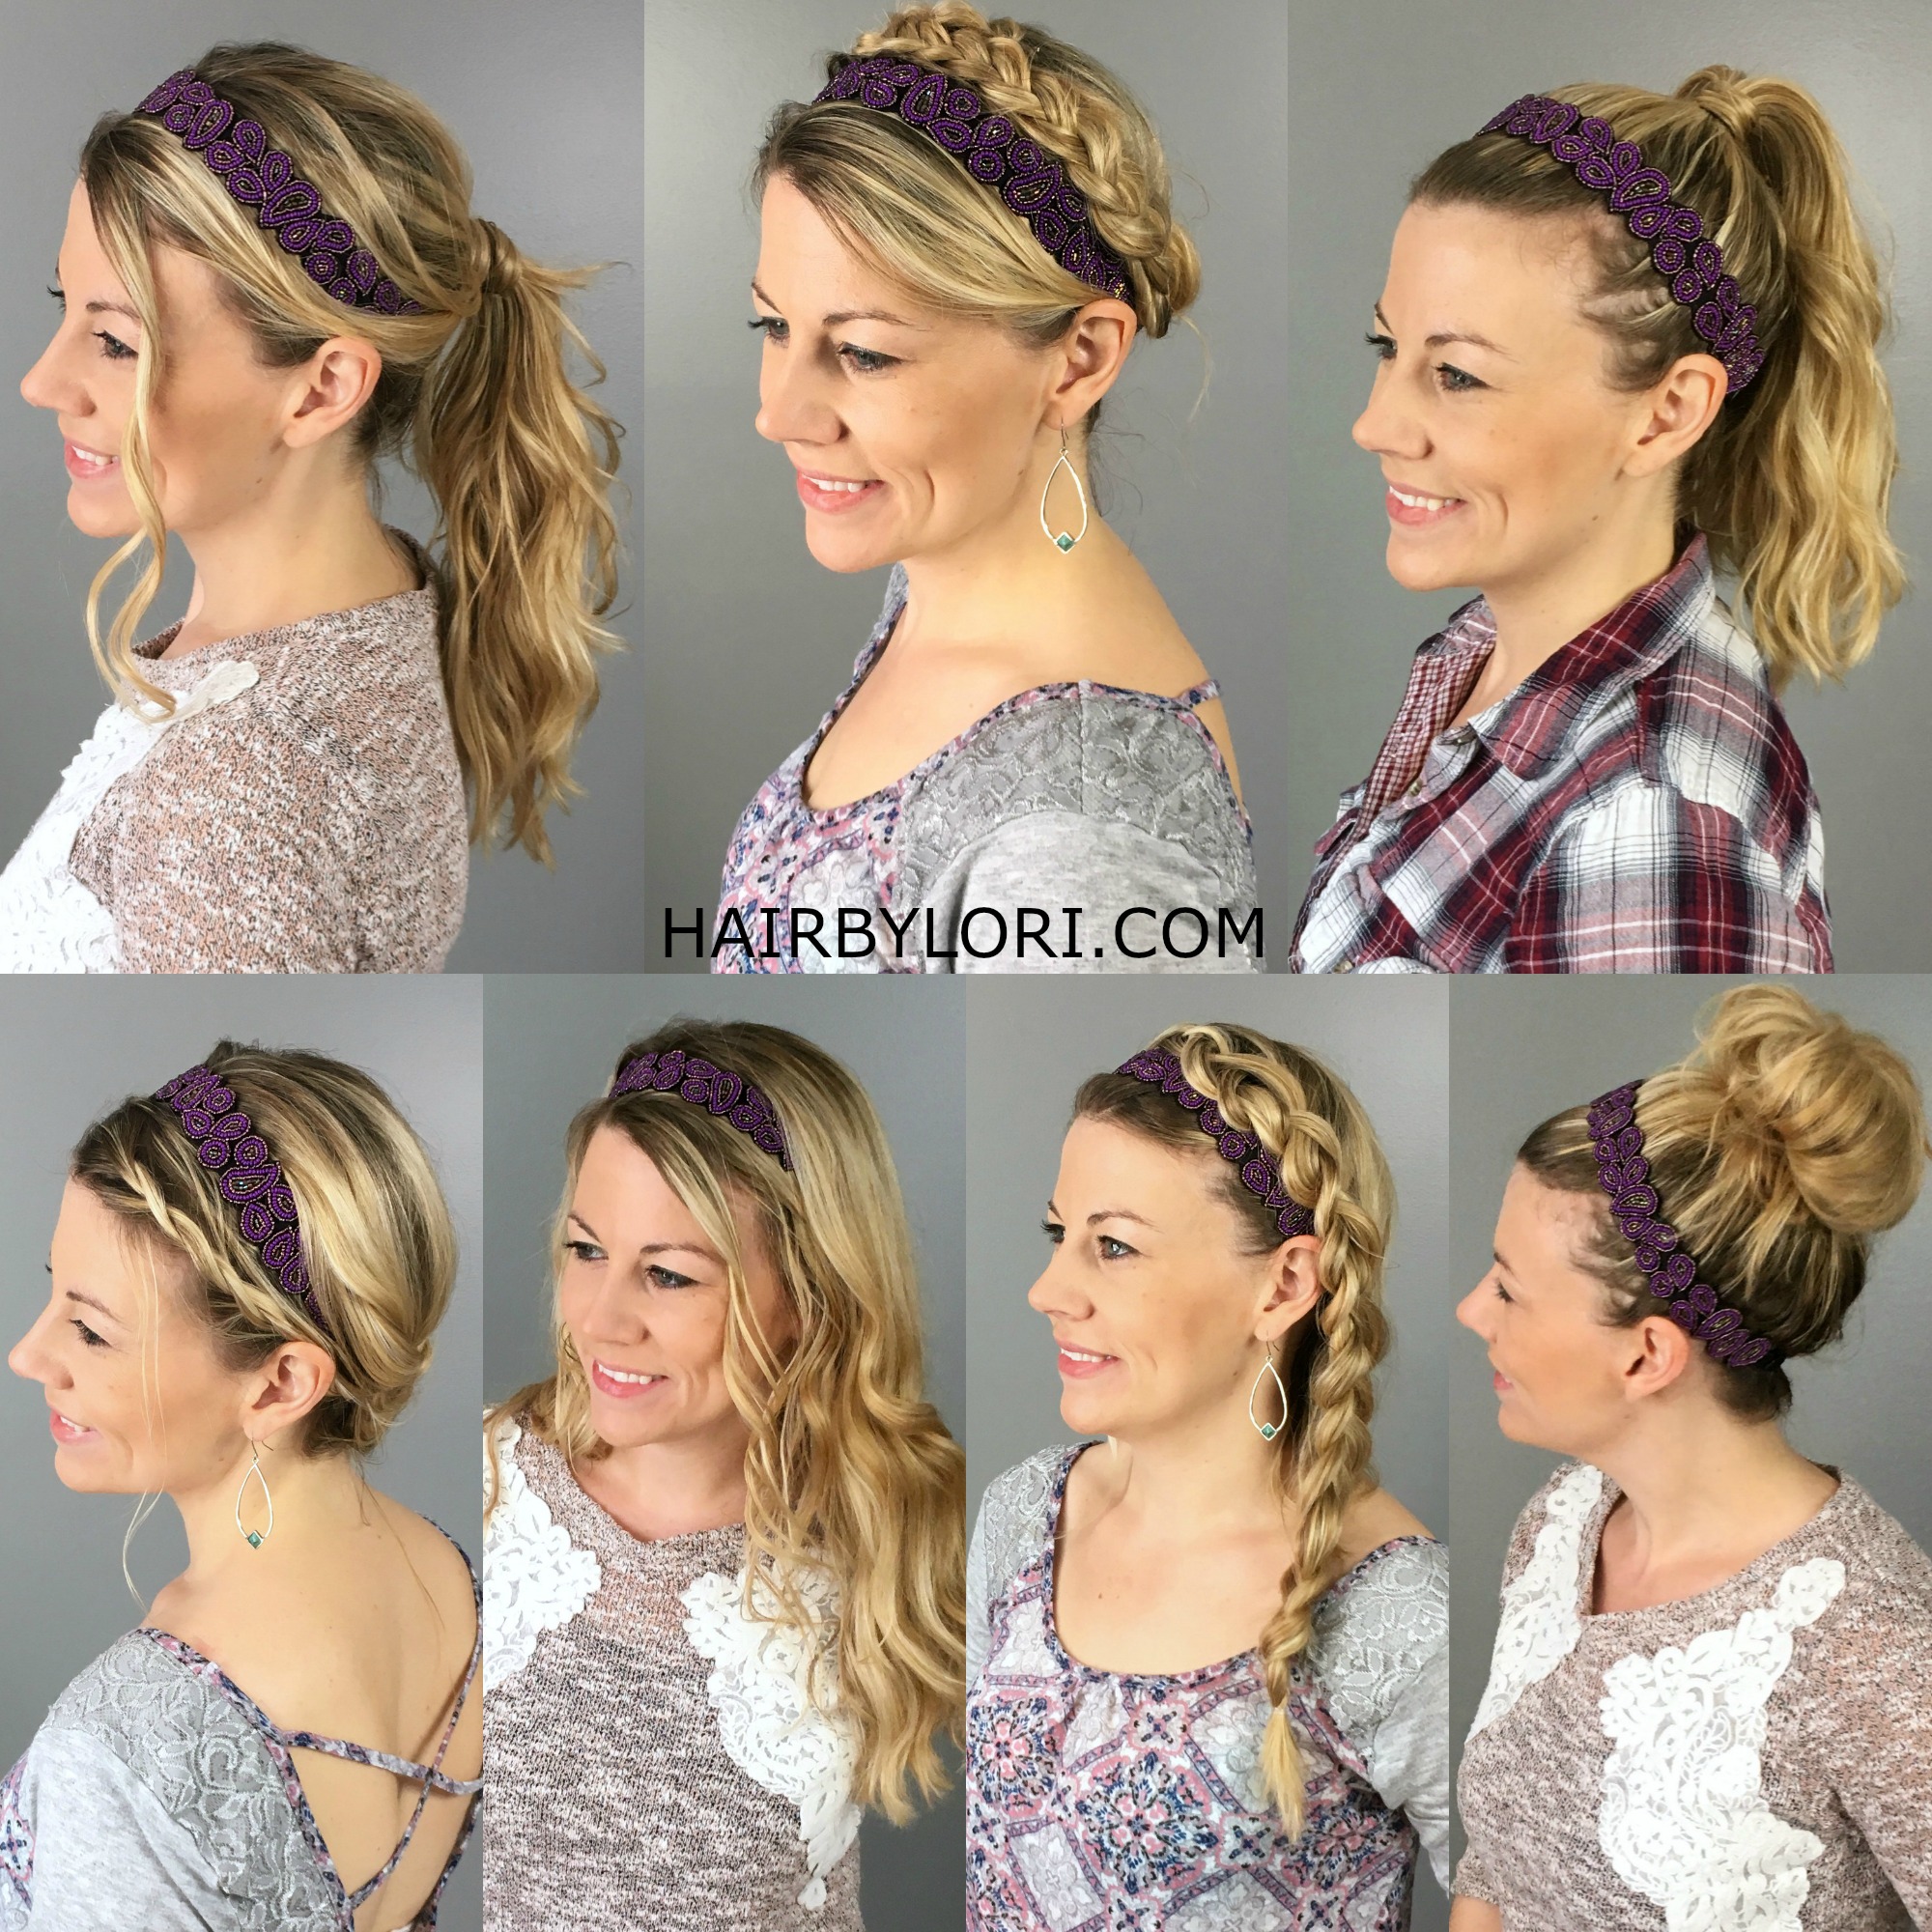 7 Ways to Wear a Headband - HAIR BY LORI